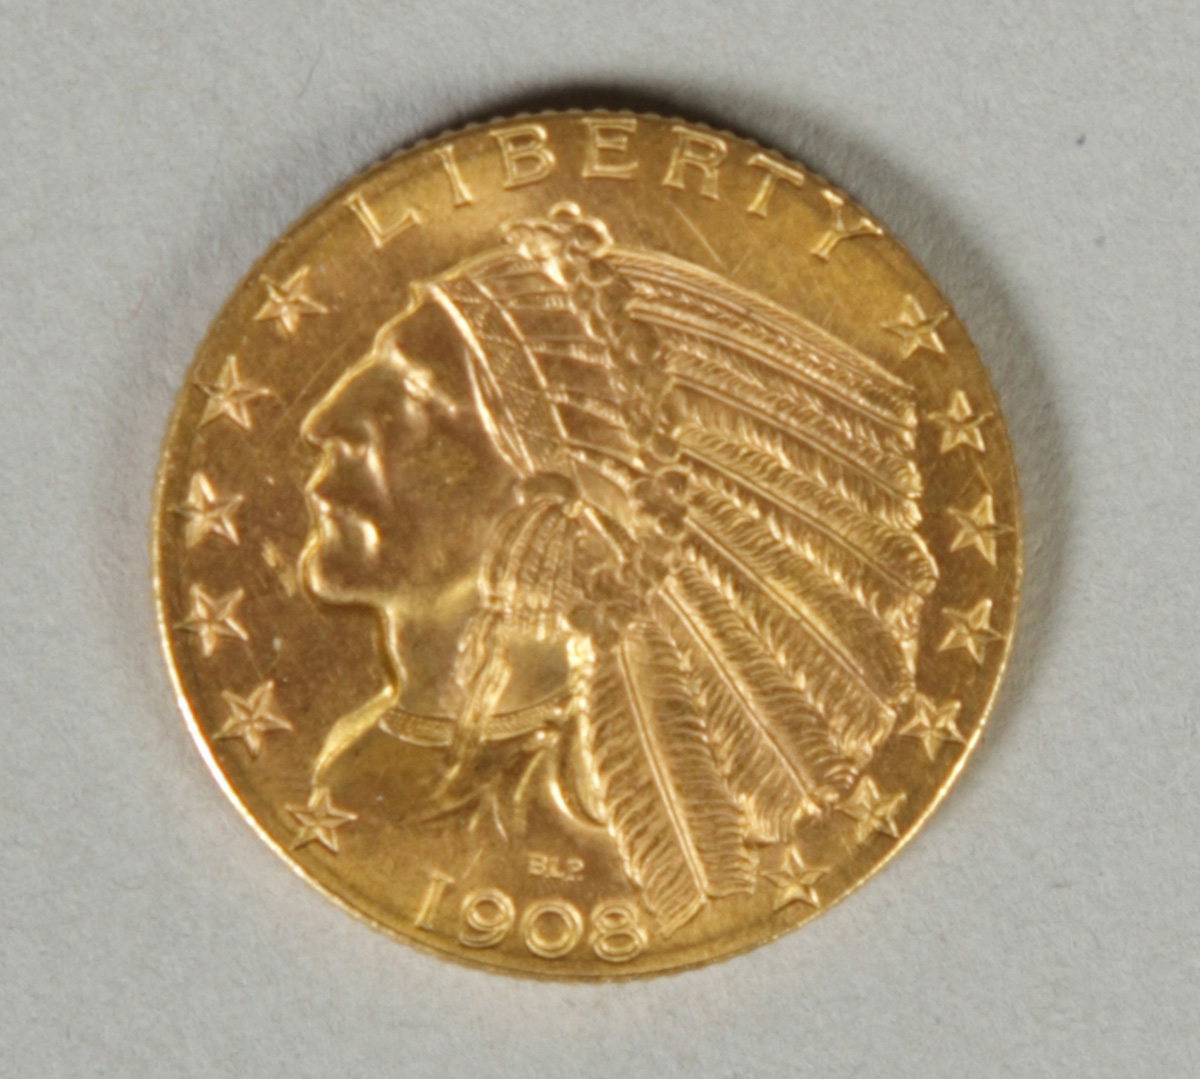 1908 Liberty Gold Coin Five Dollar